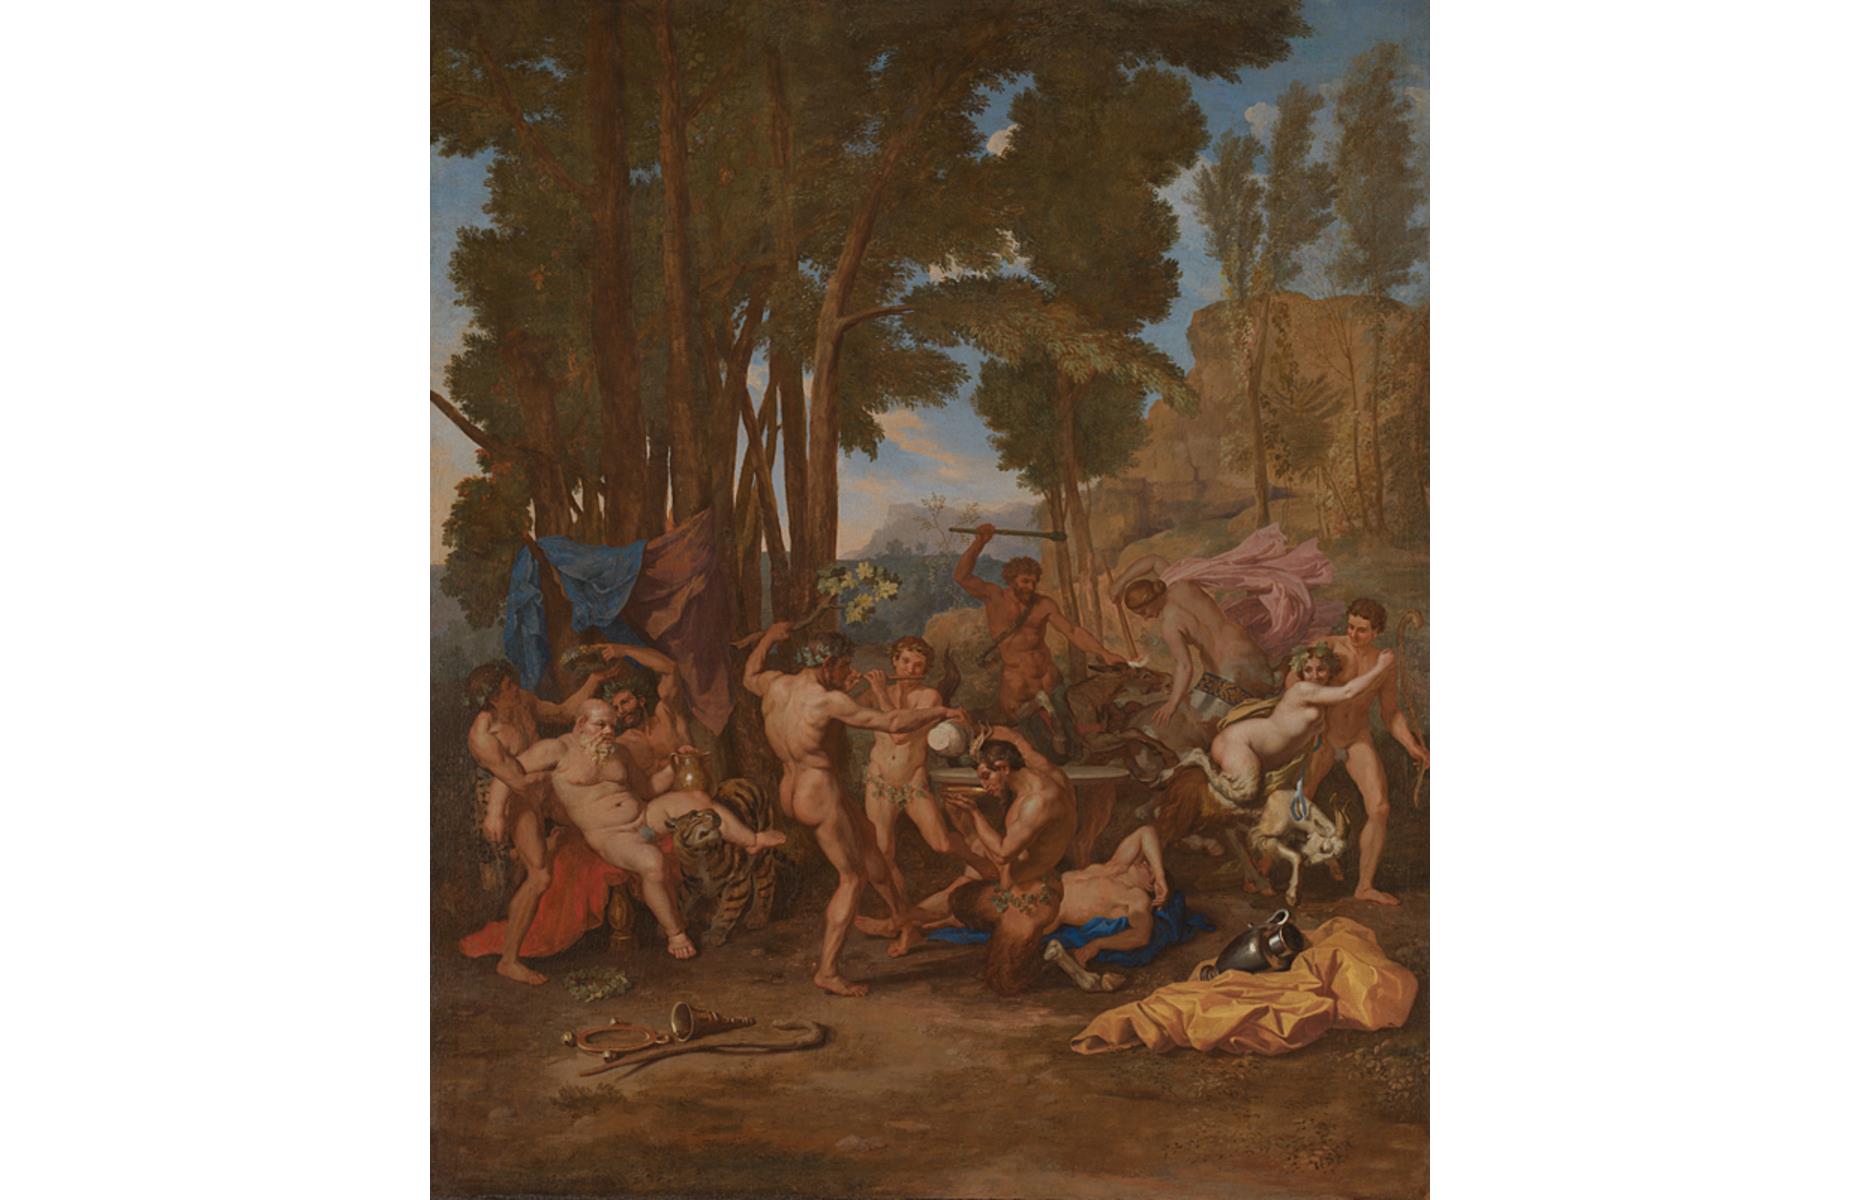 Nicolas Poussin's The Triumph of Silenus